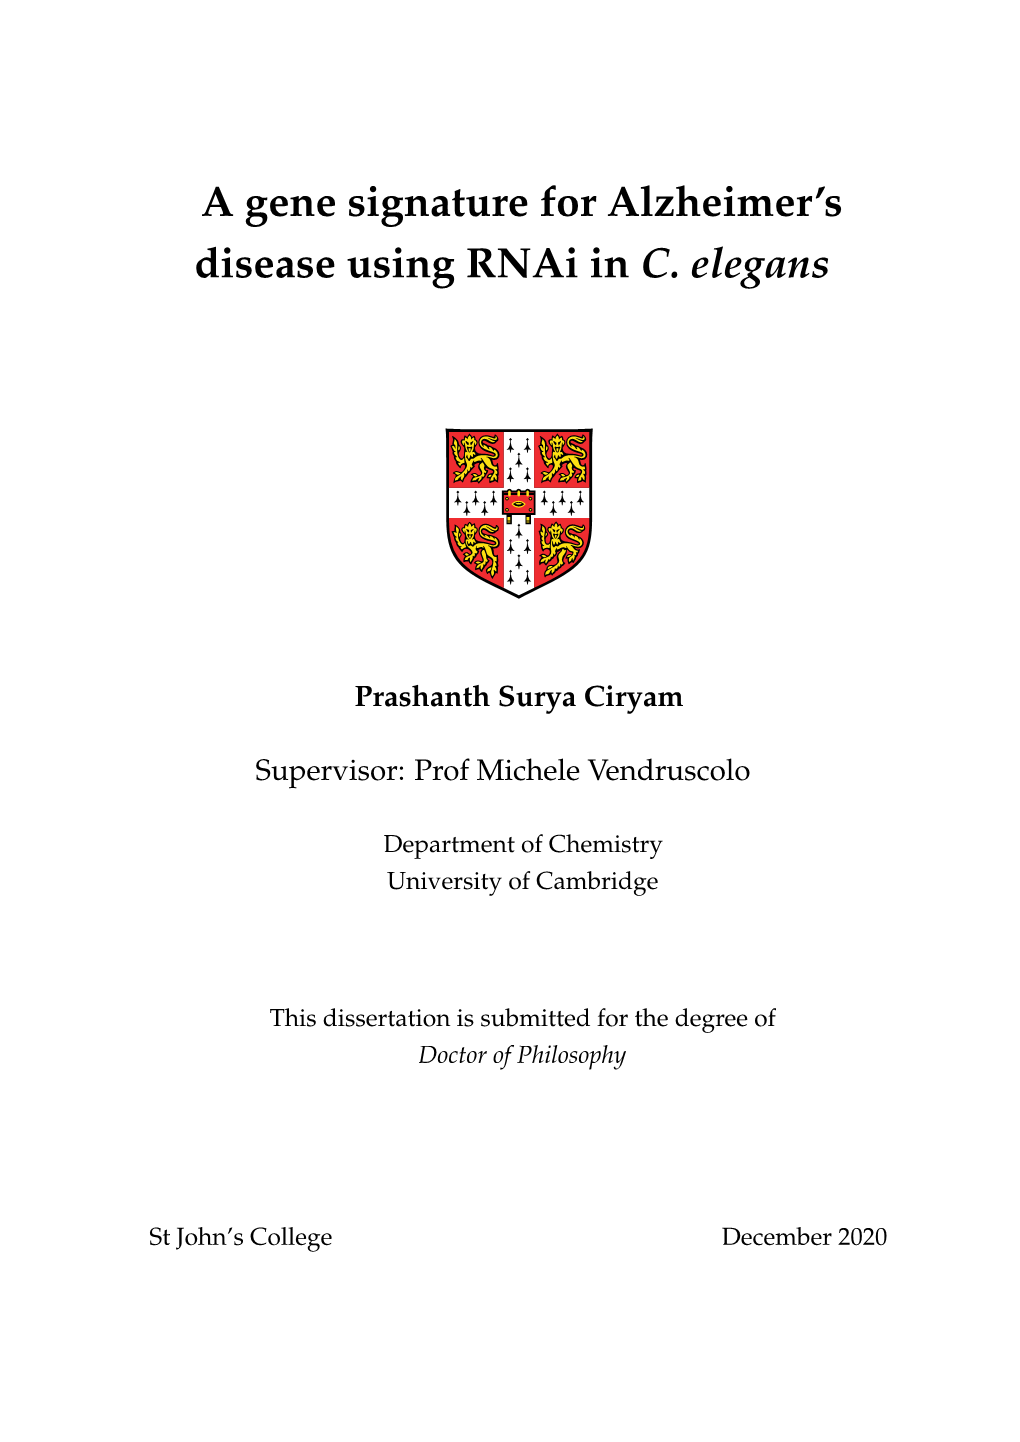 A Gene Signature for Alzheimer's Disease Using Rnai in C. Elegans